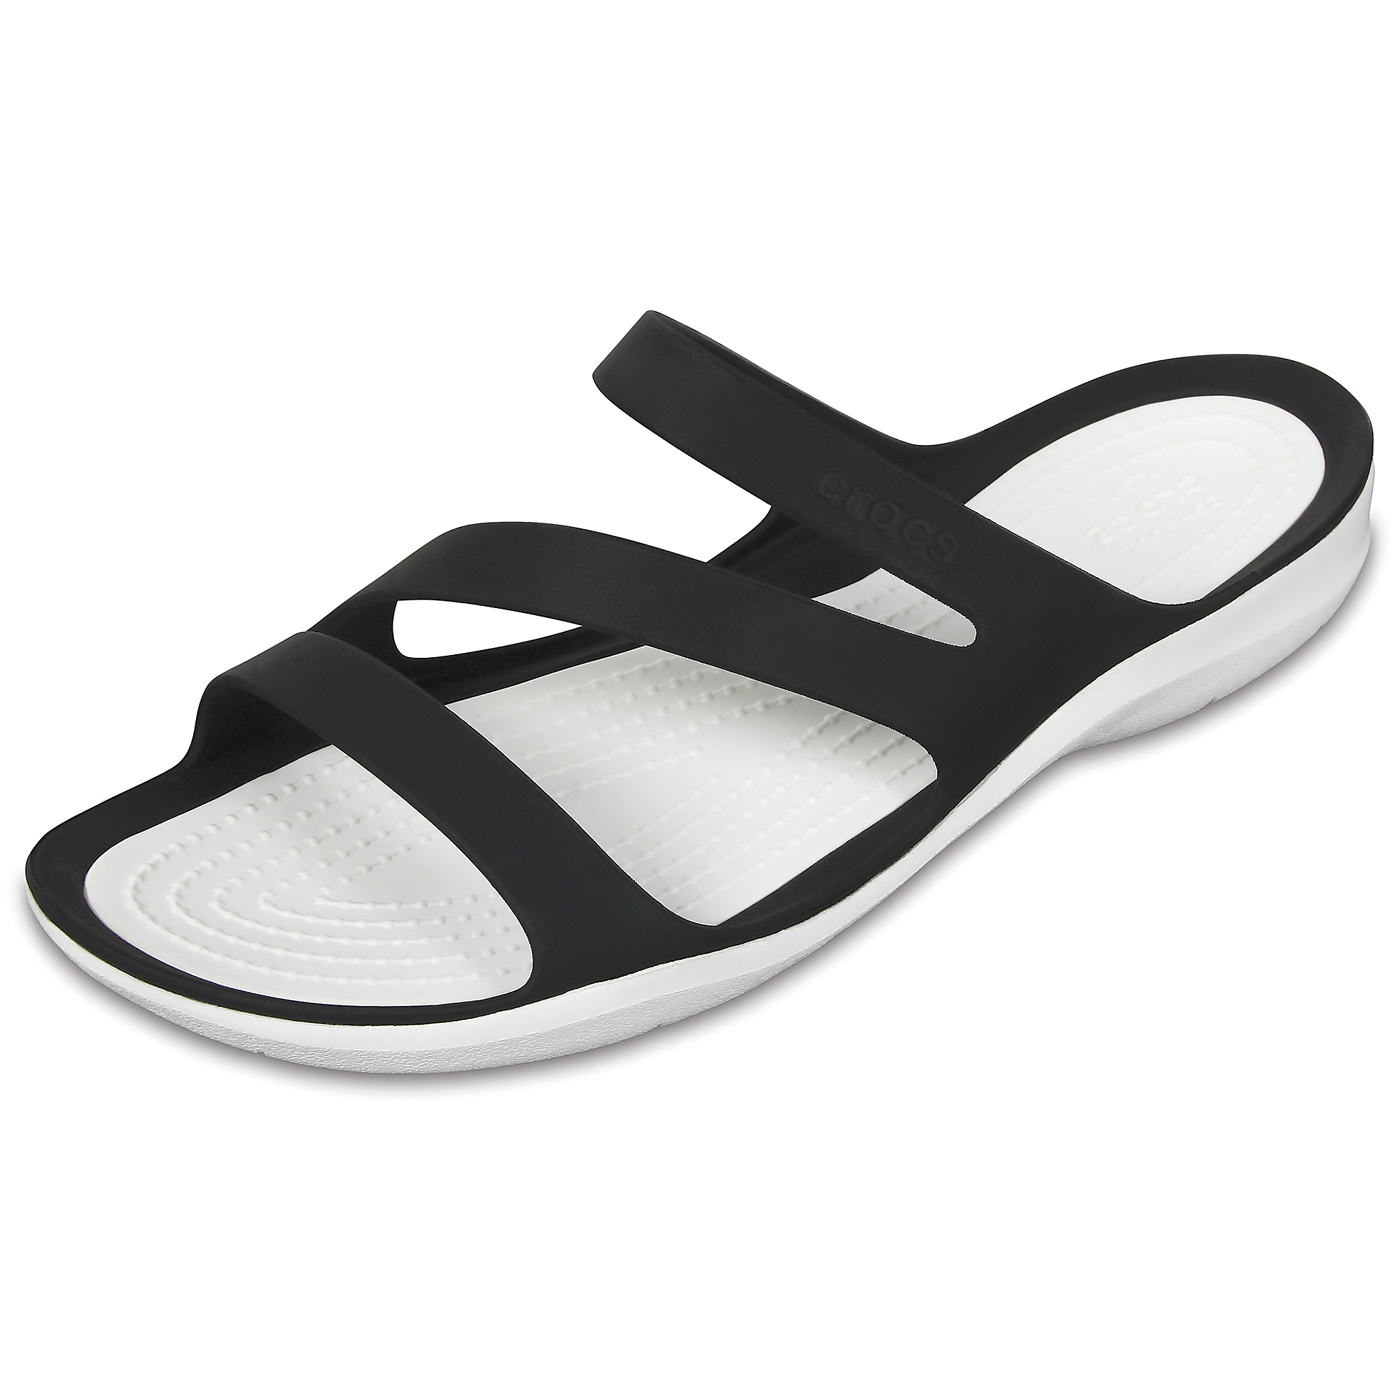 crocs swiftwater sandal black